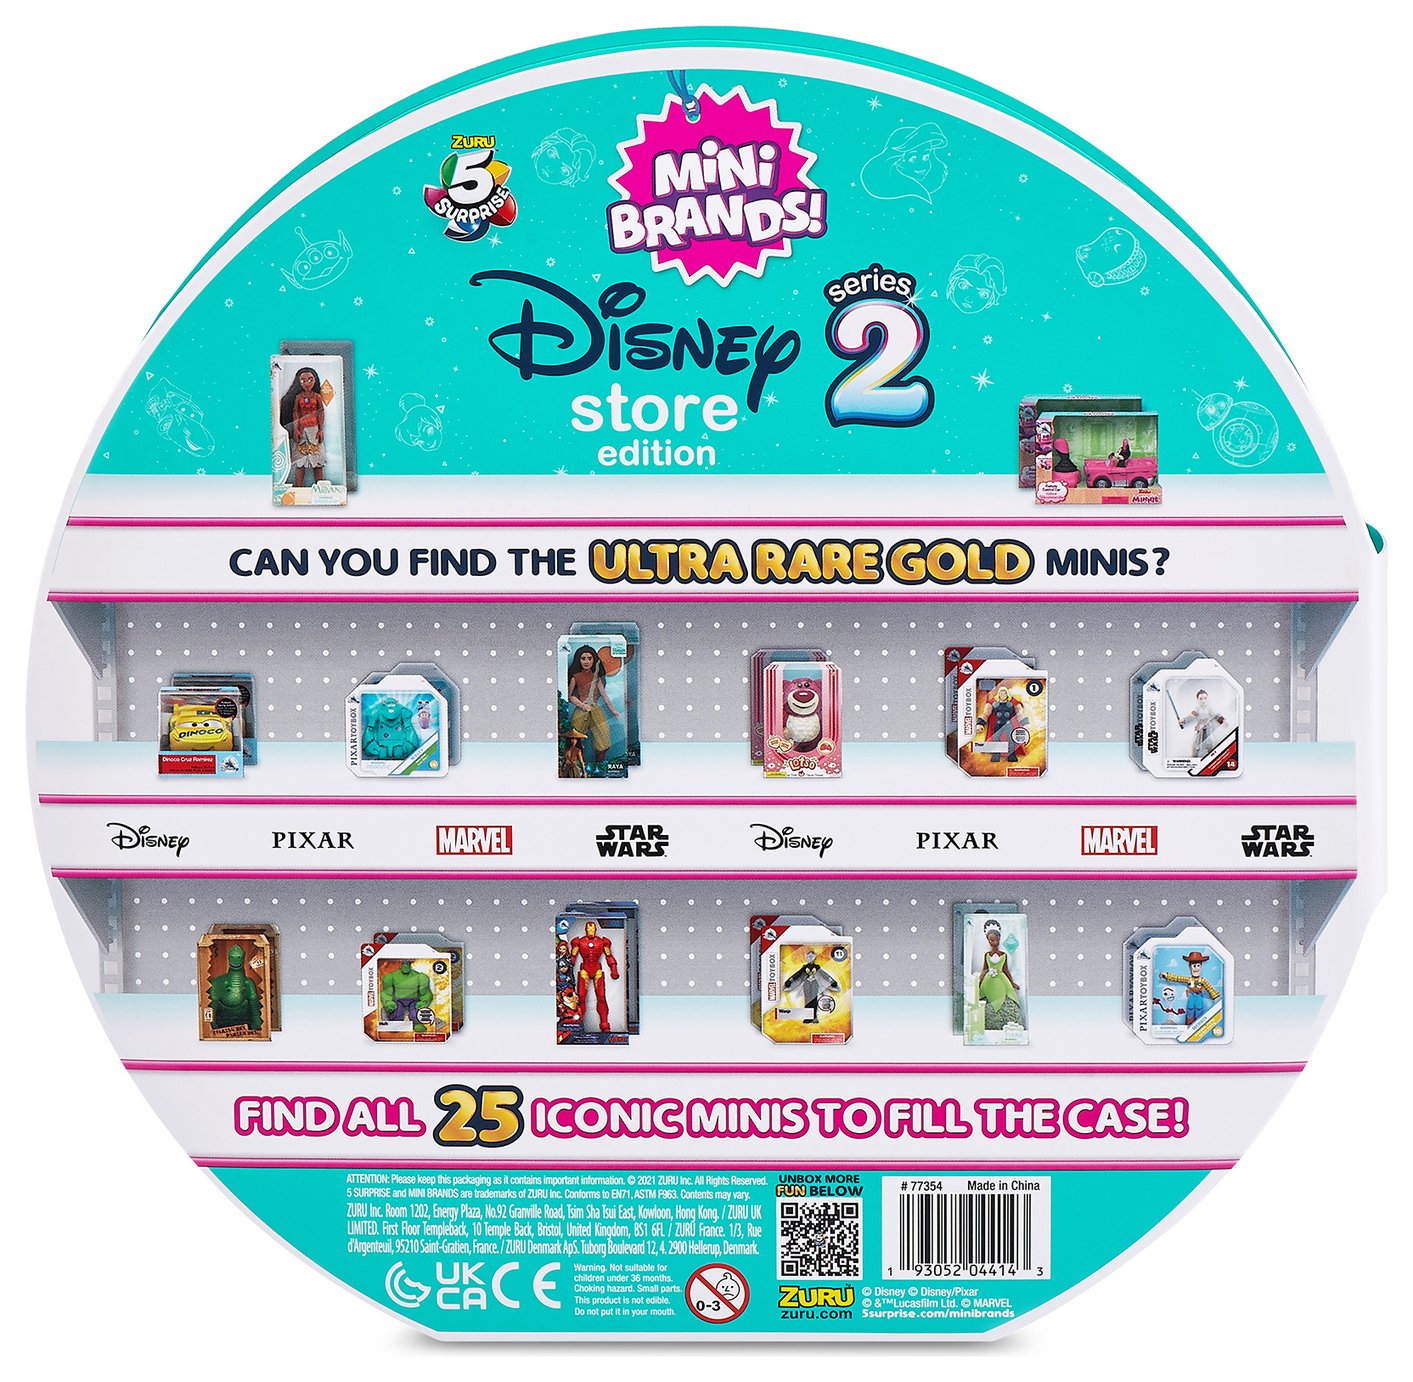 Zuru 5 Surprise Mini Brands Disney Store Series 2 Case review